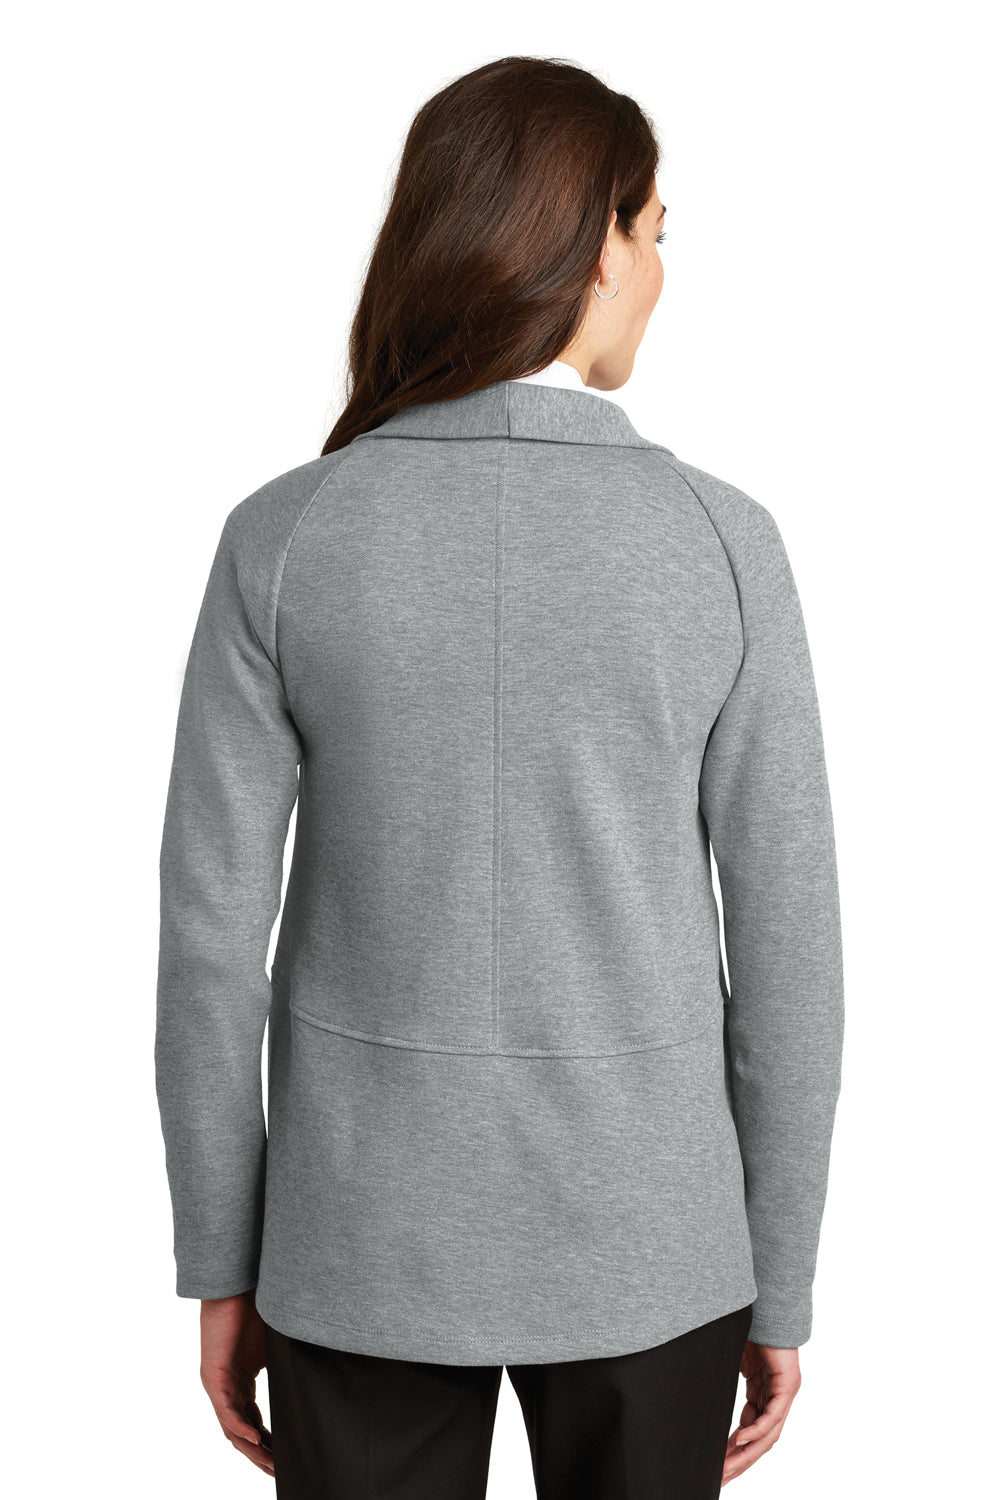 Port Authority L807 Womens Long Sleeve Cardigan Sweater Heather Medium Grey Back